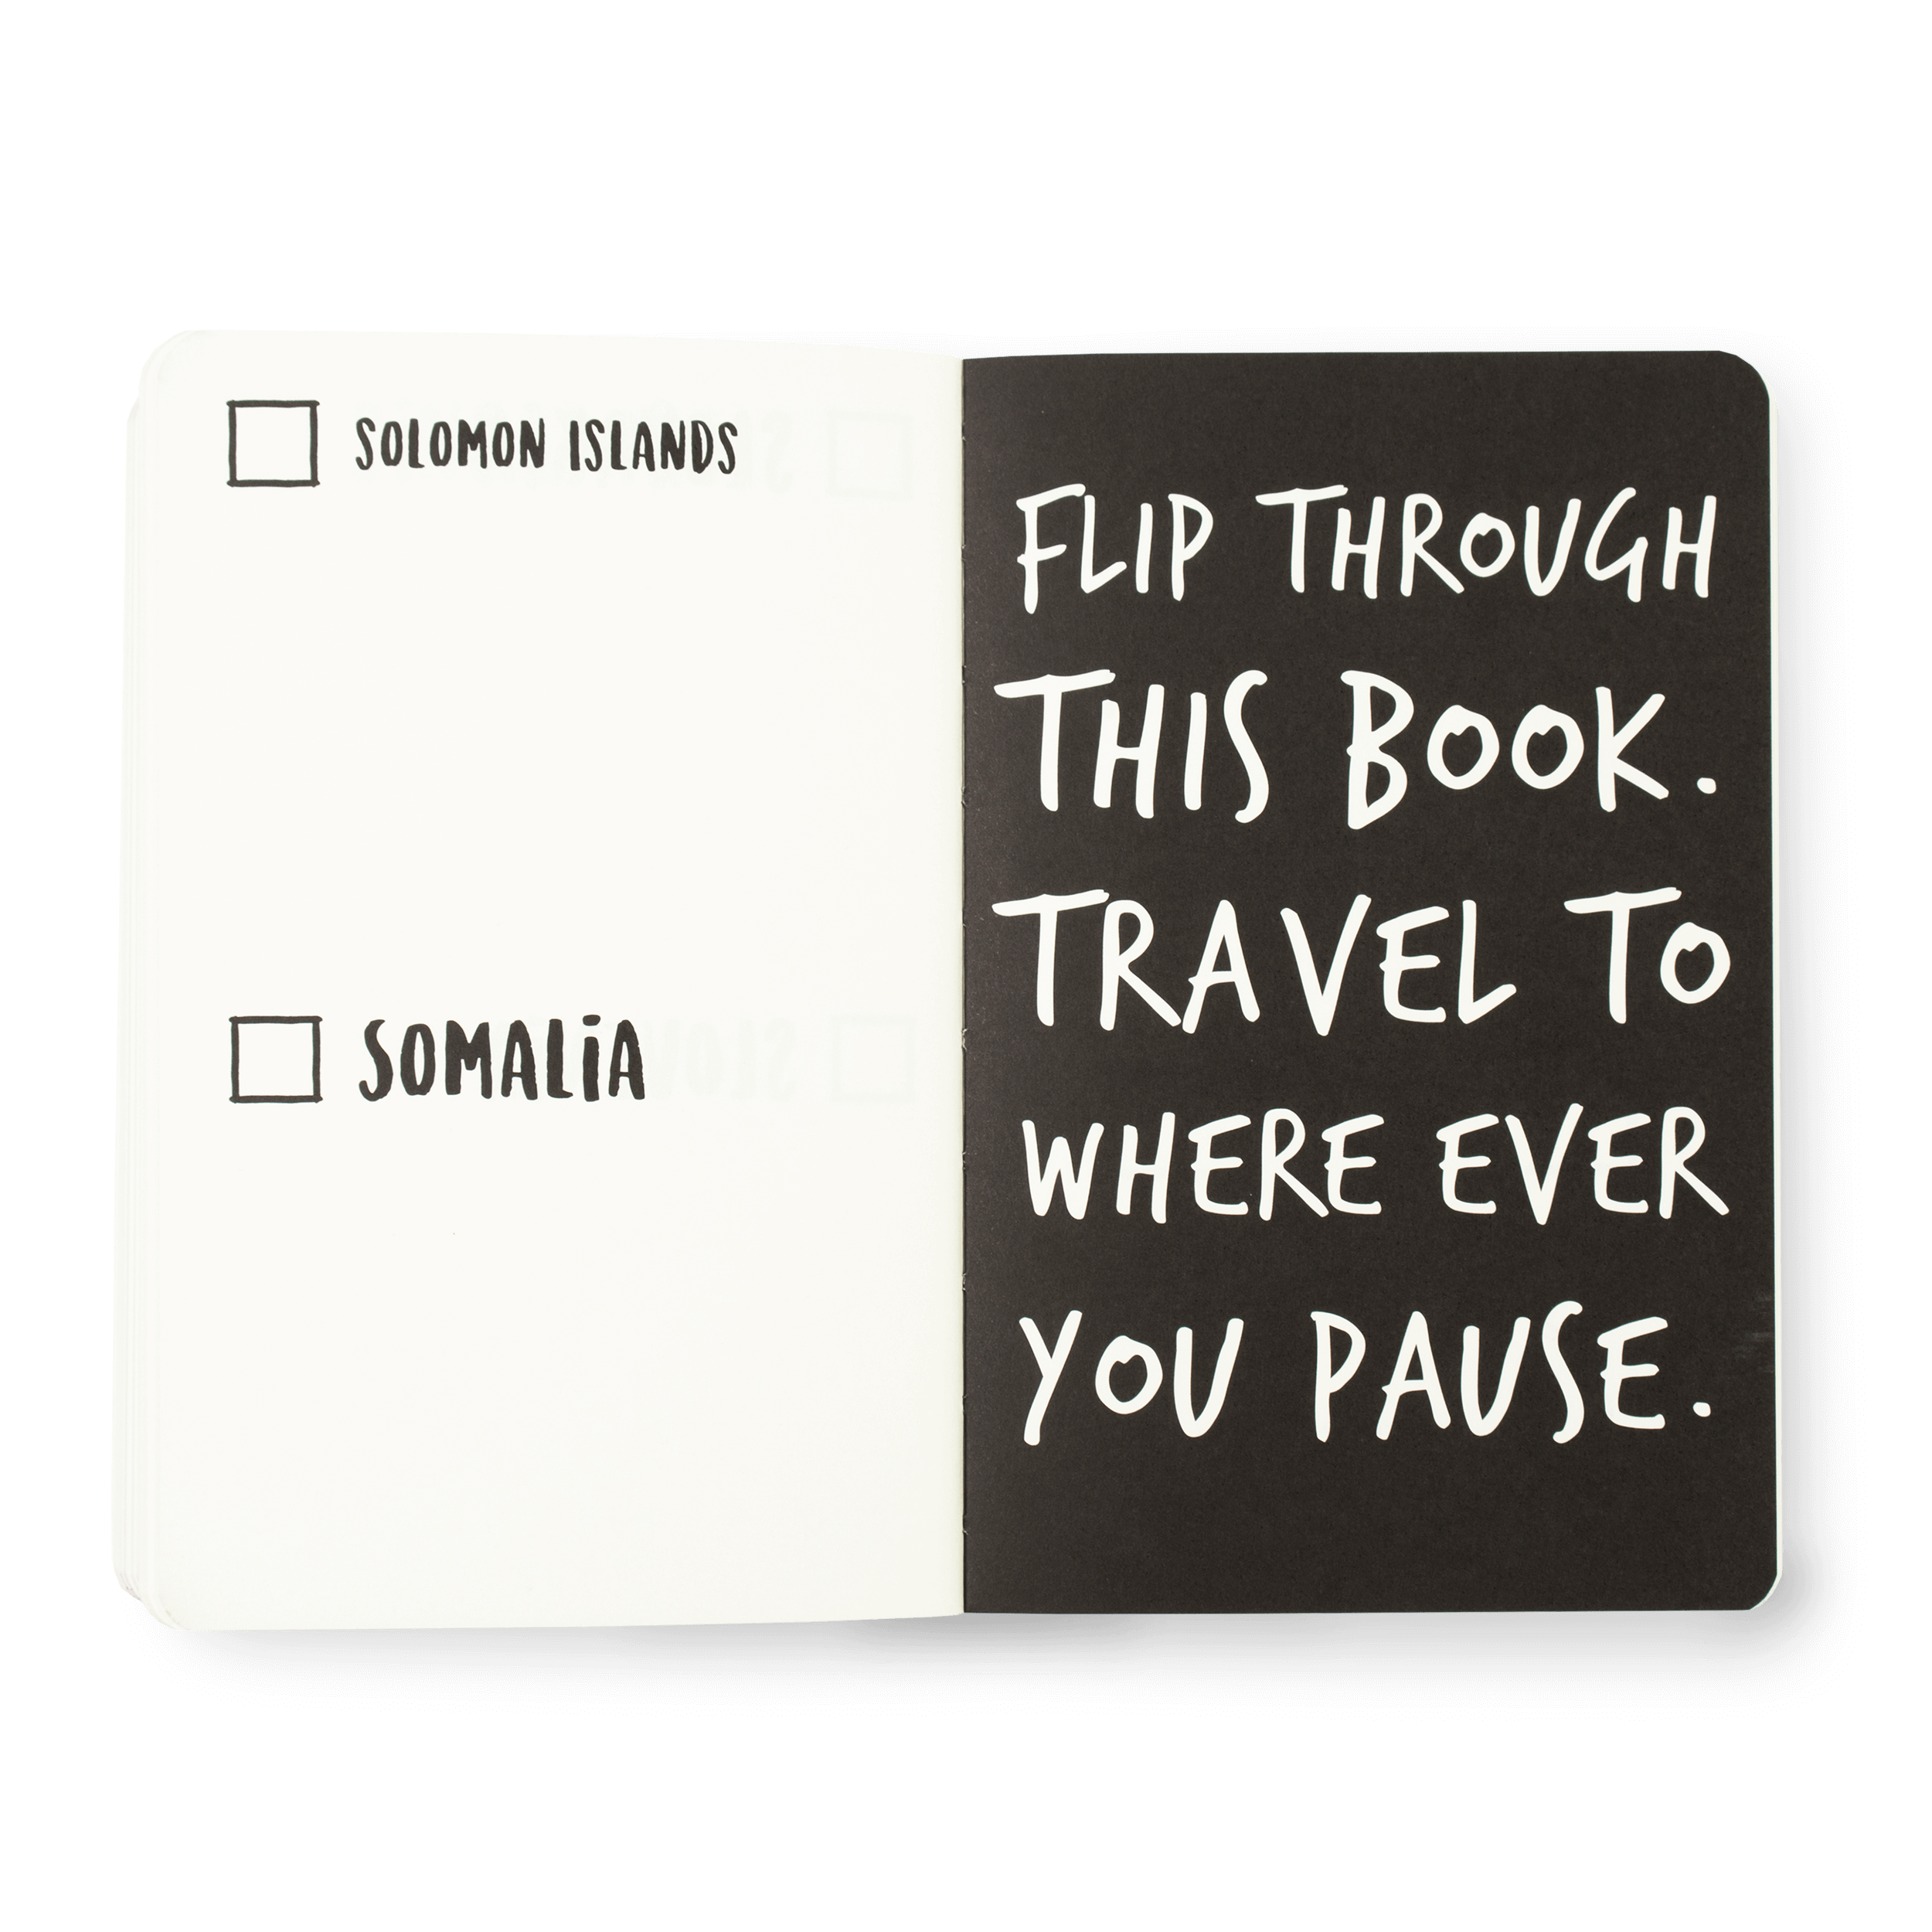 The Adventure Book - Your Travel Journals Around The World